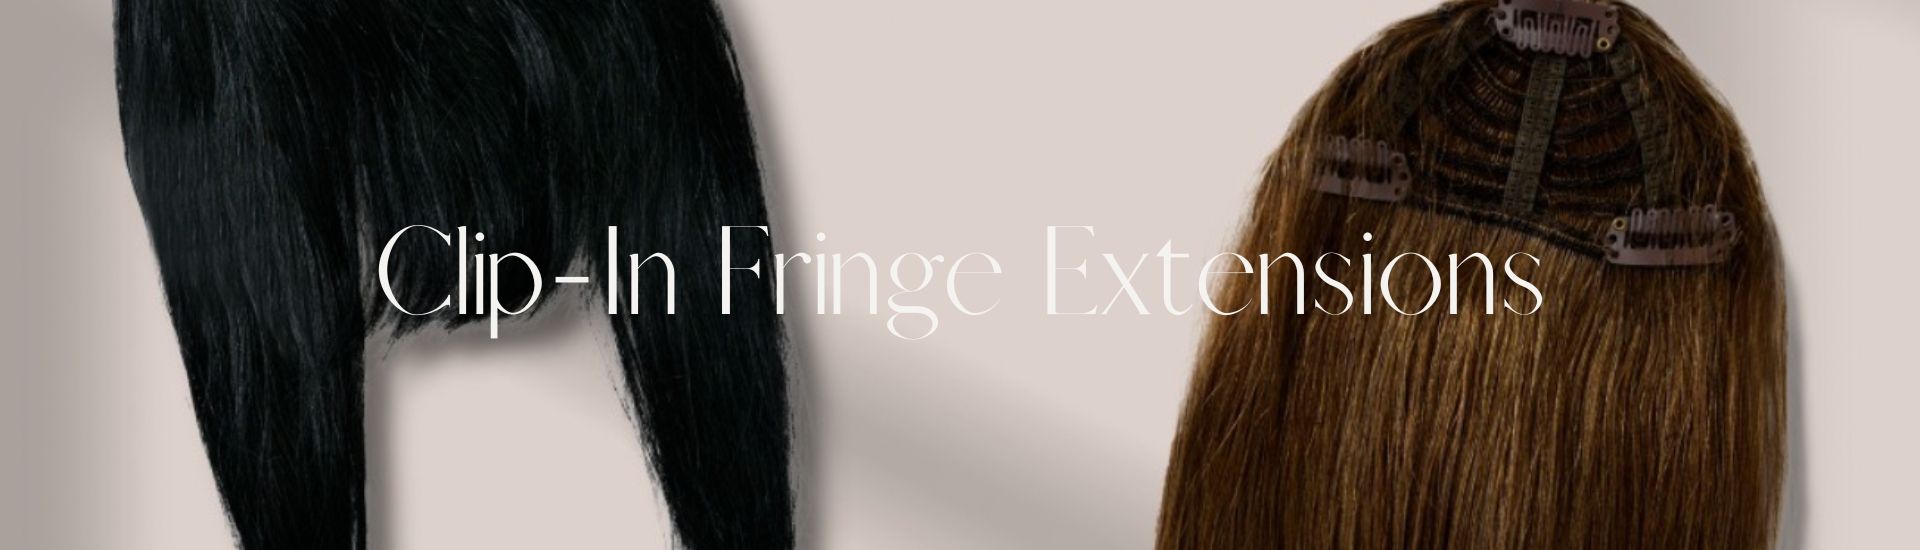 Superior Hair Clip-In Fringe Extensions product closeup banner - desktop version